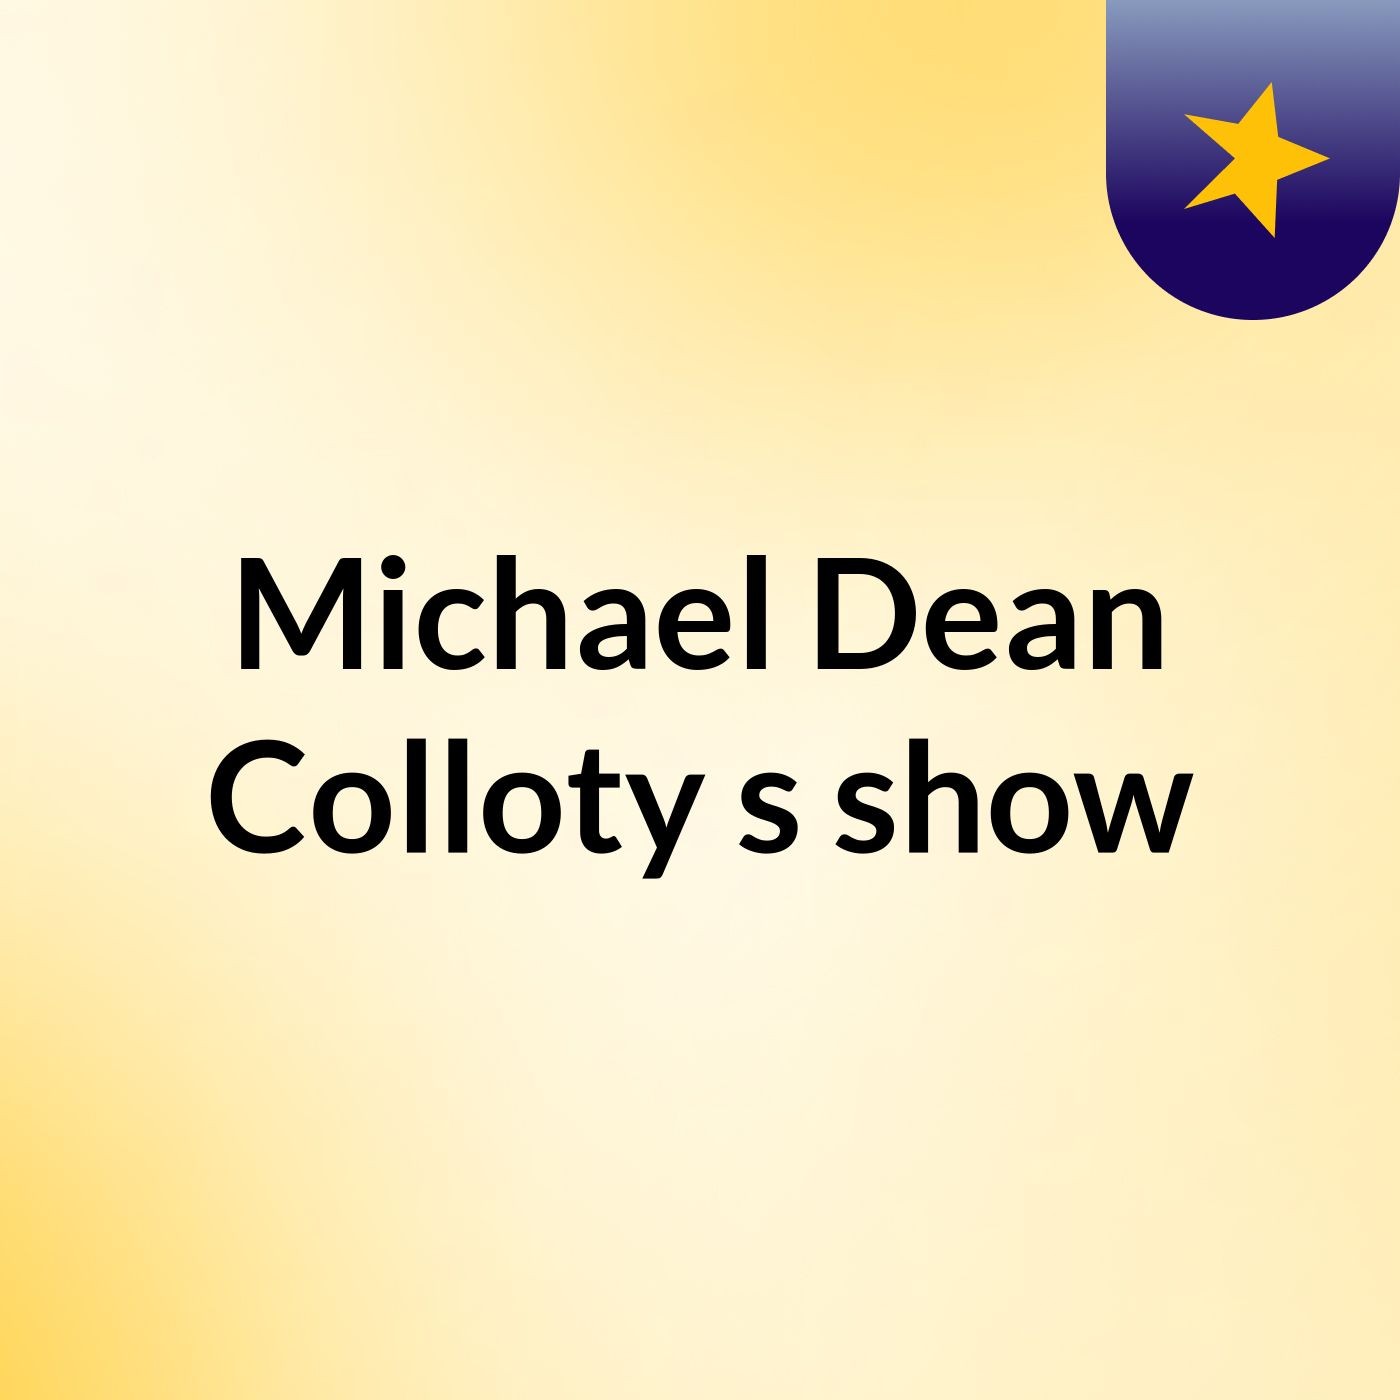 Michael Dean Colloty's show